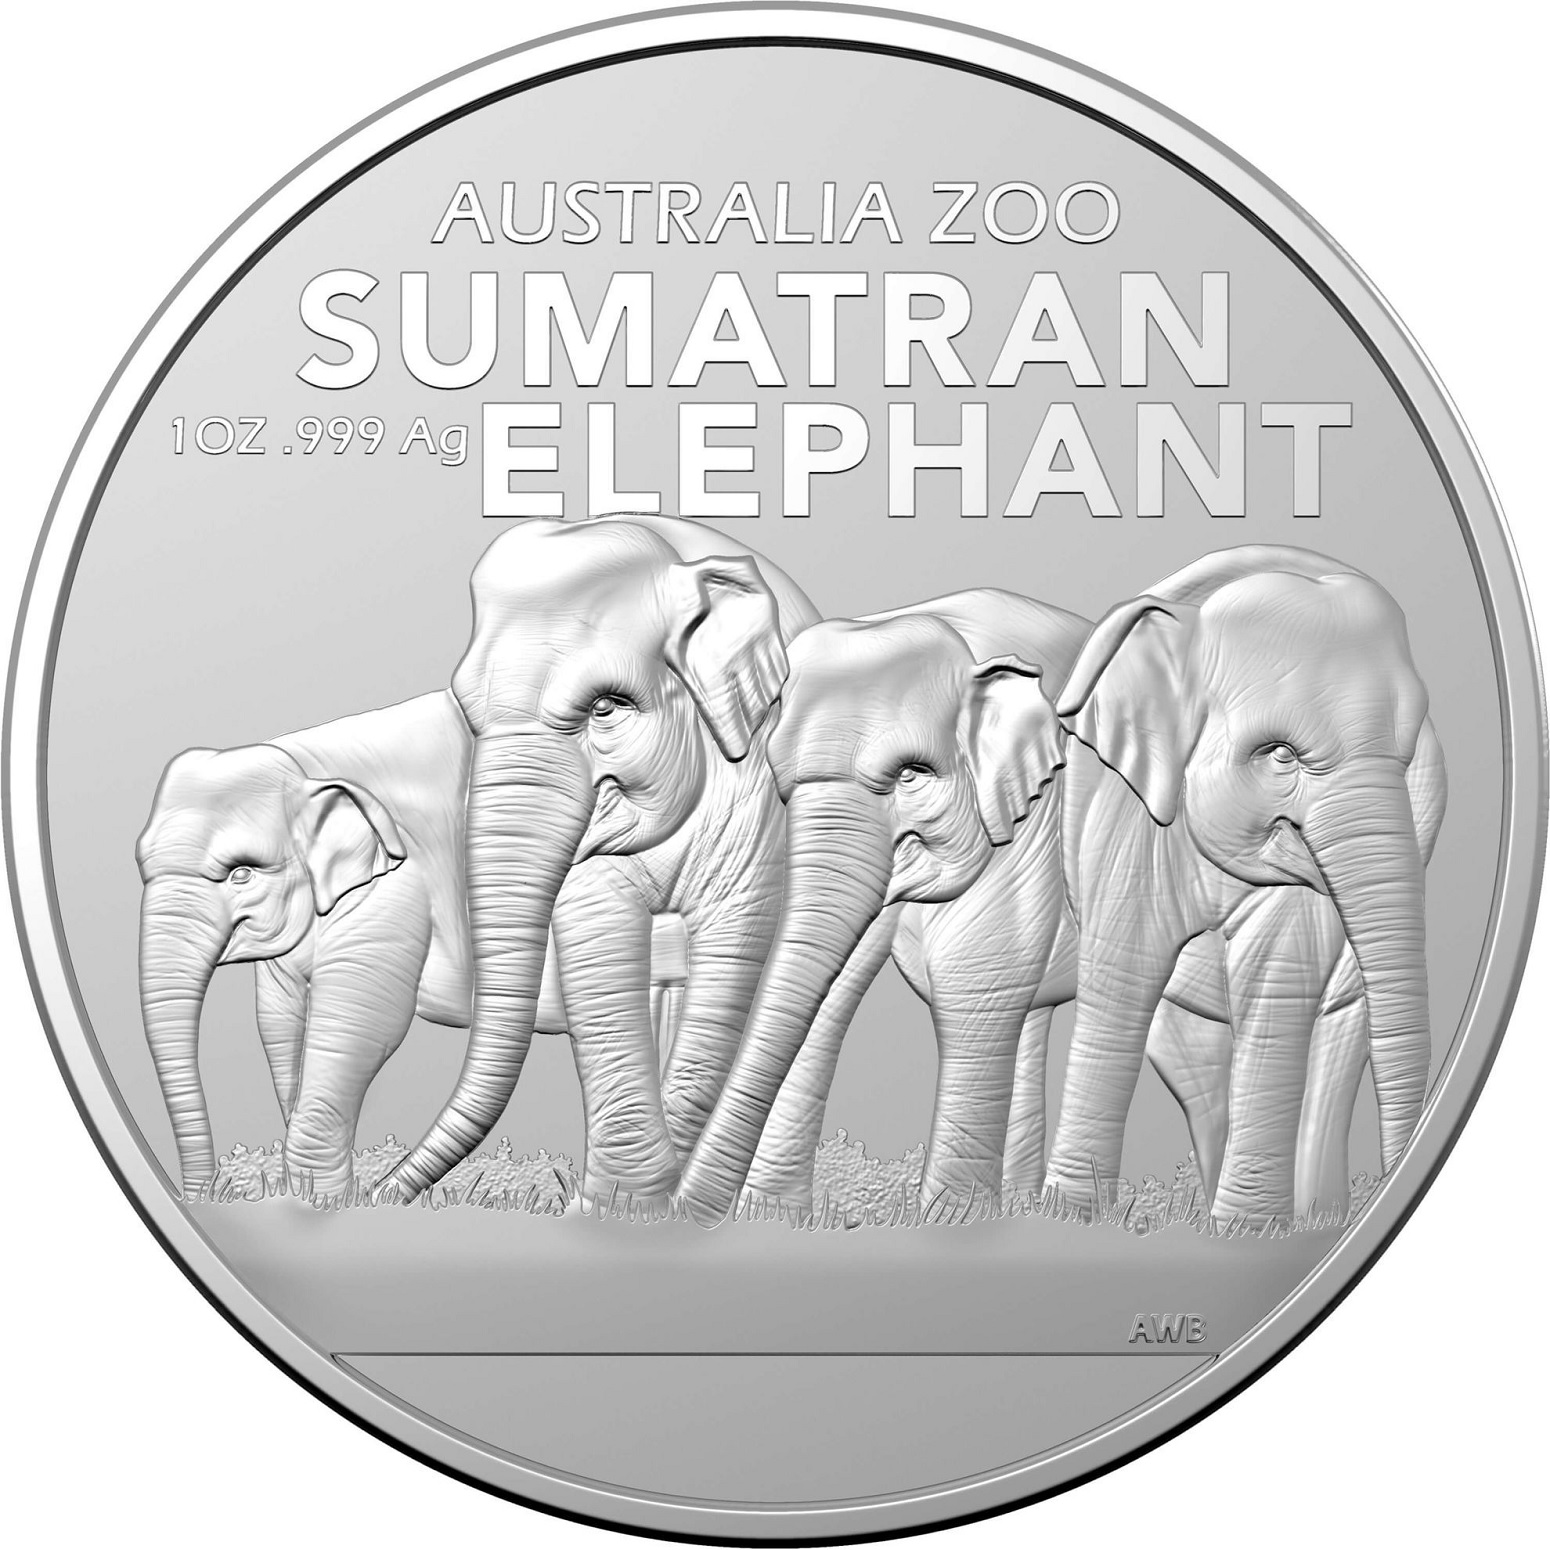 (W017.1.D.2022.11069) 1 $ Australia 2022 1 oz BU silver - Sumatran Elephant Reverse (zoom)